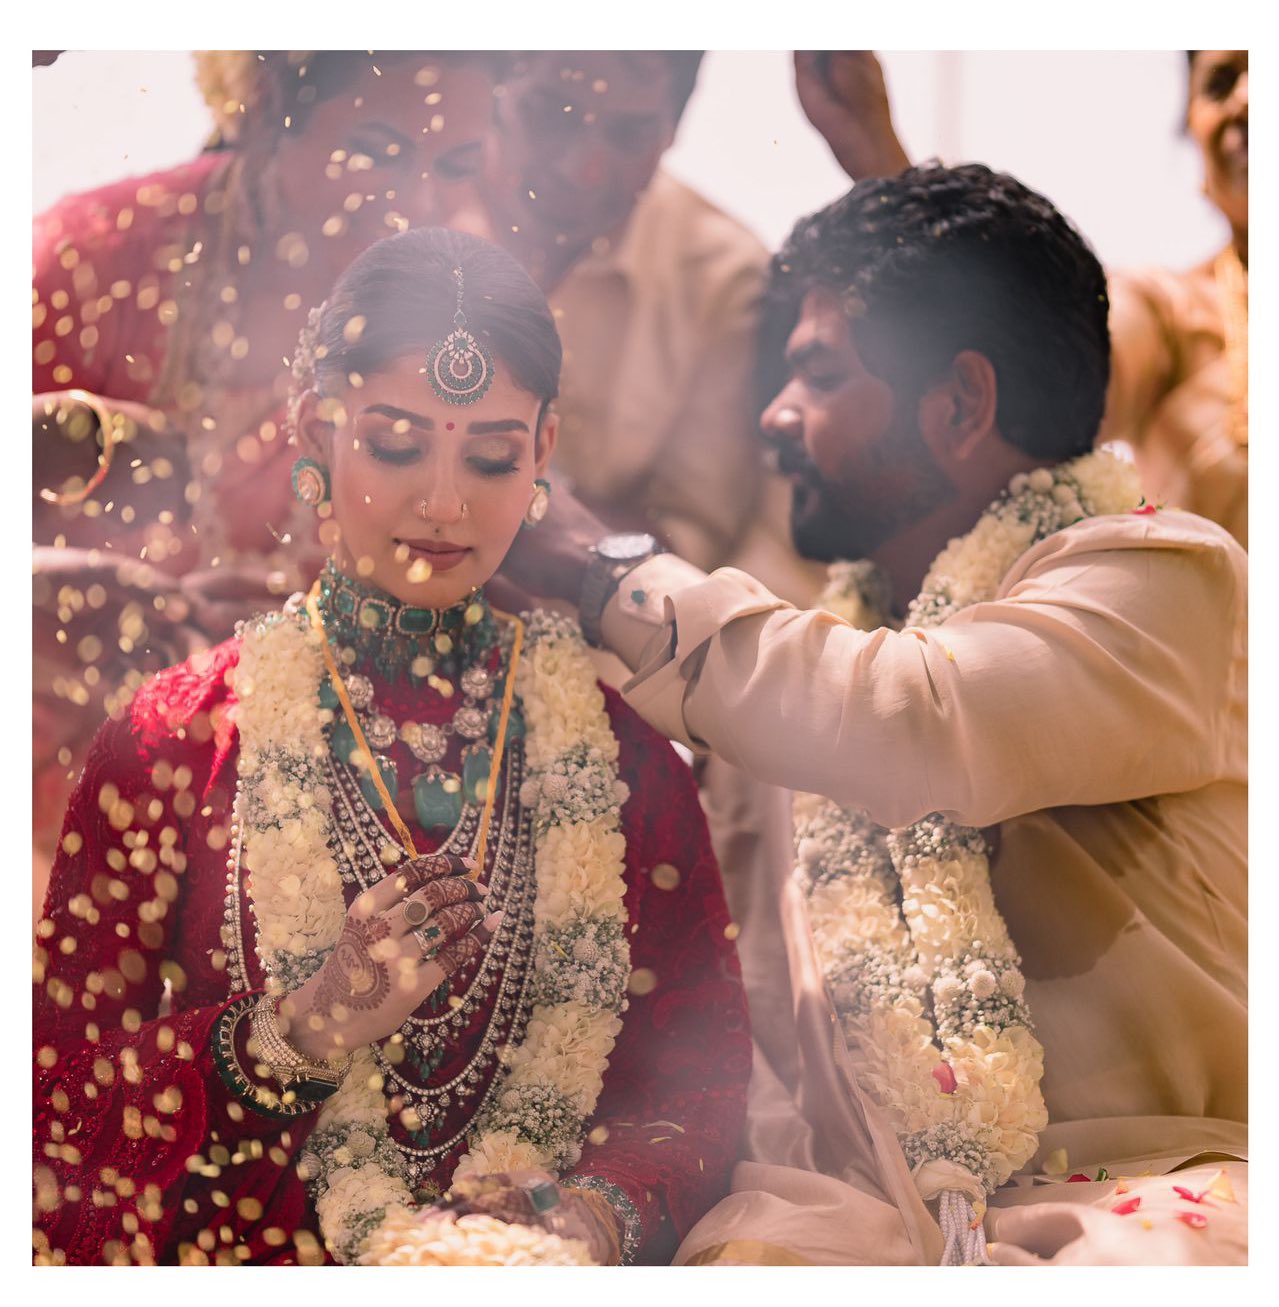 Vignesh shivan releases honeymoon romantic photos on social media